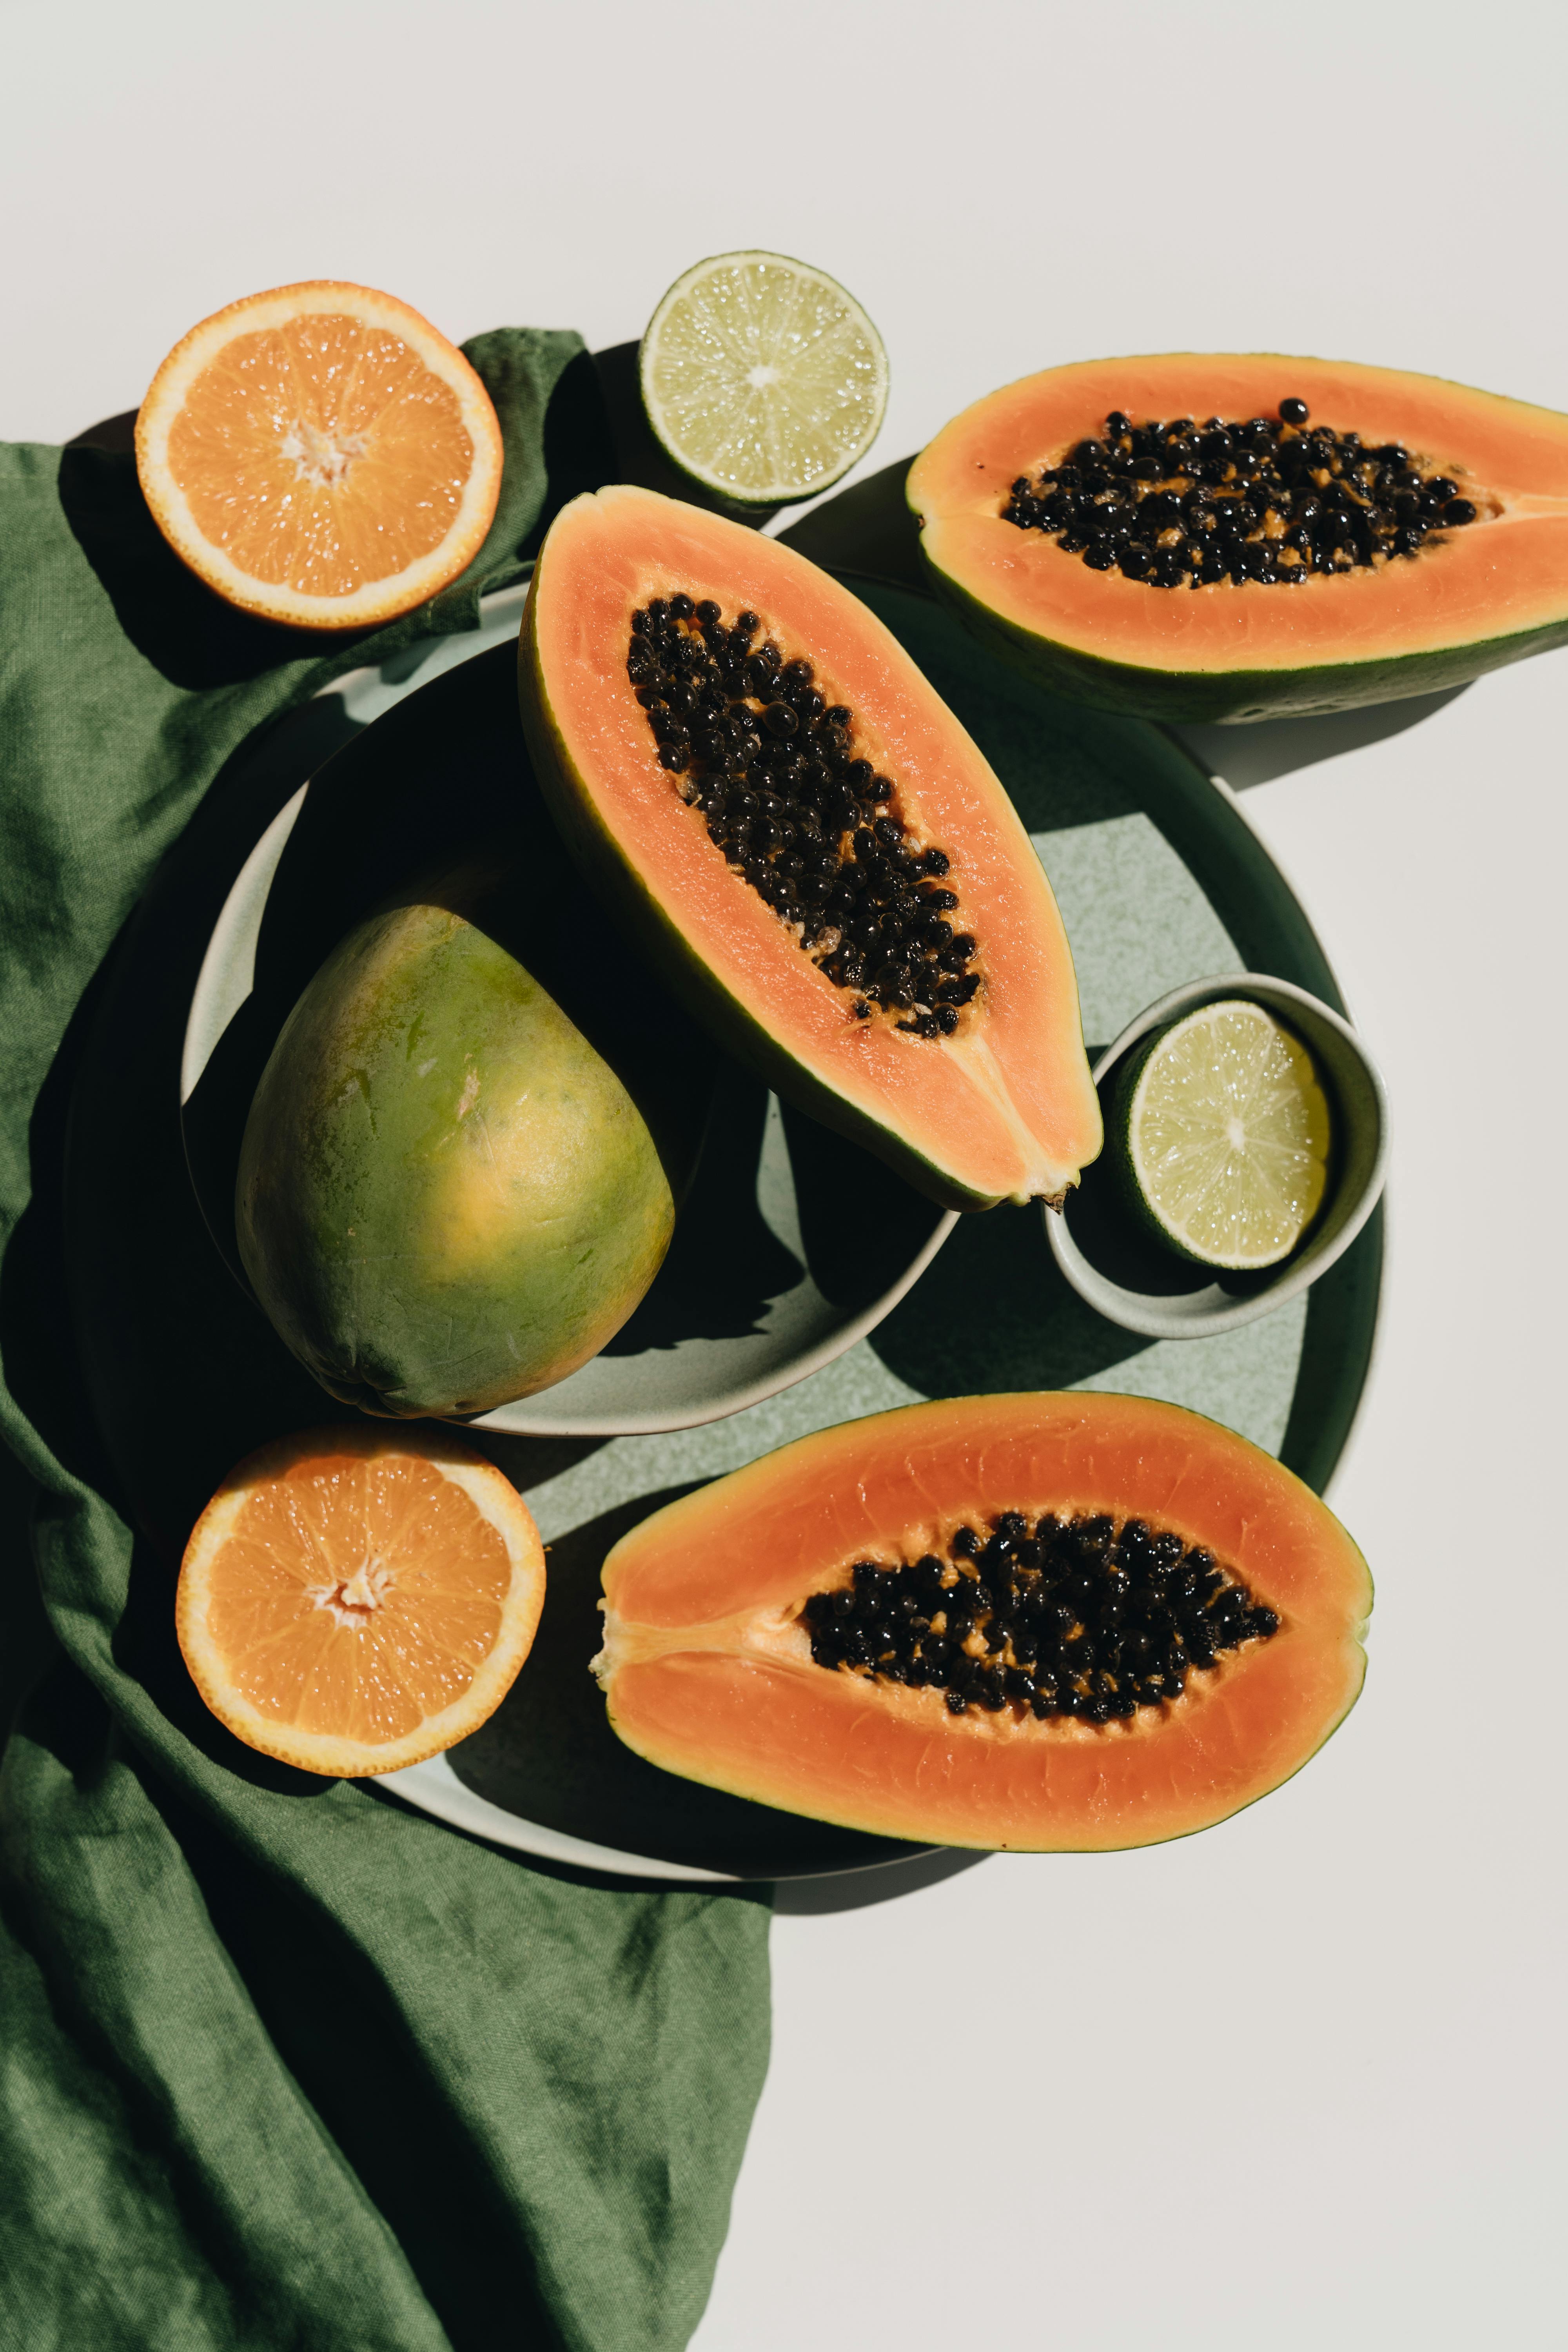 Fresh papaya and citrus fruits delicious composition · Free Stock Photo